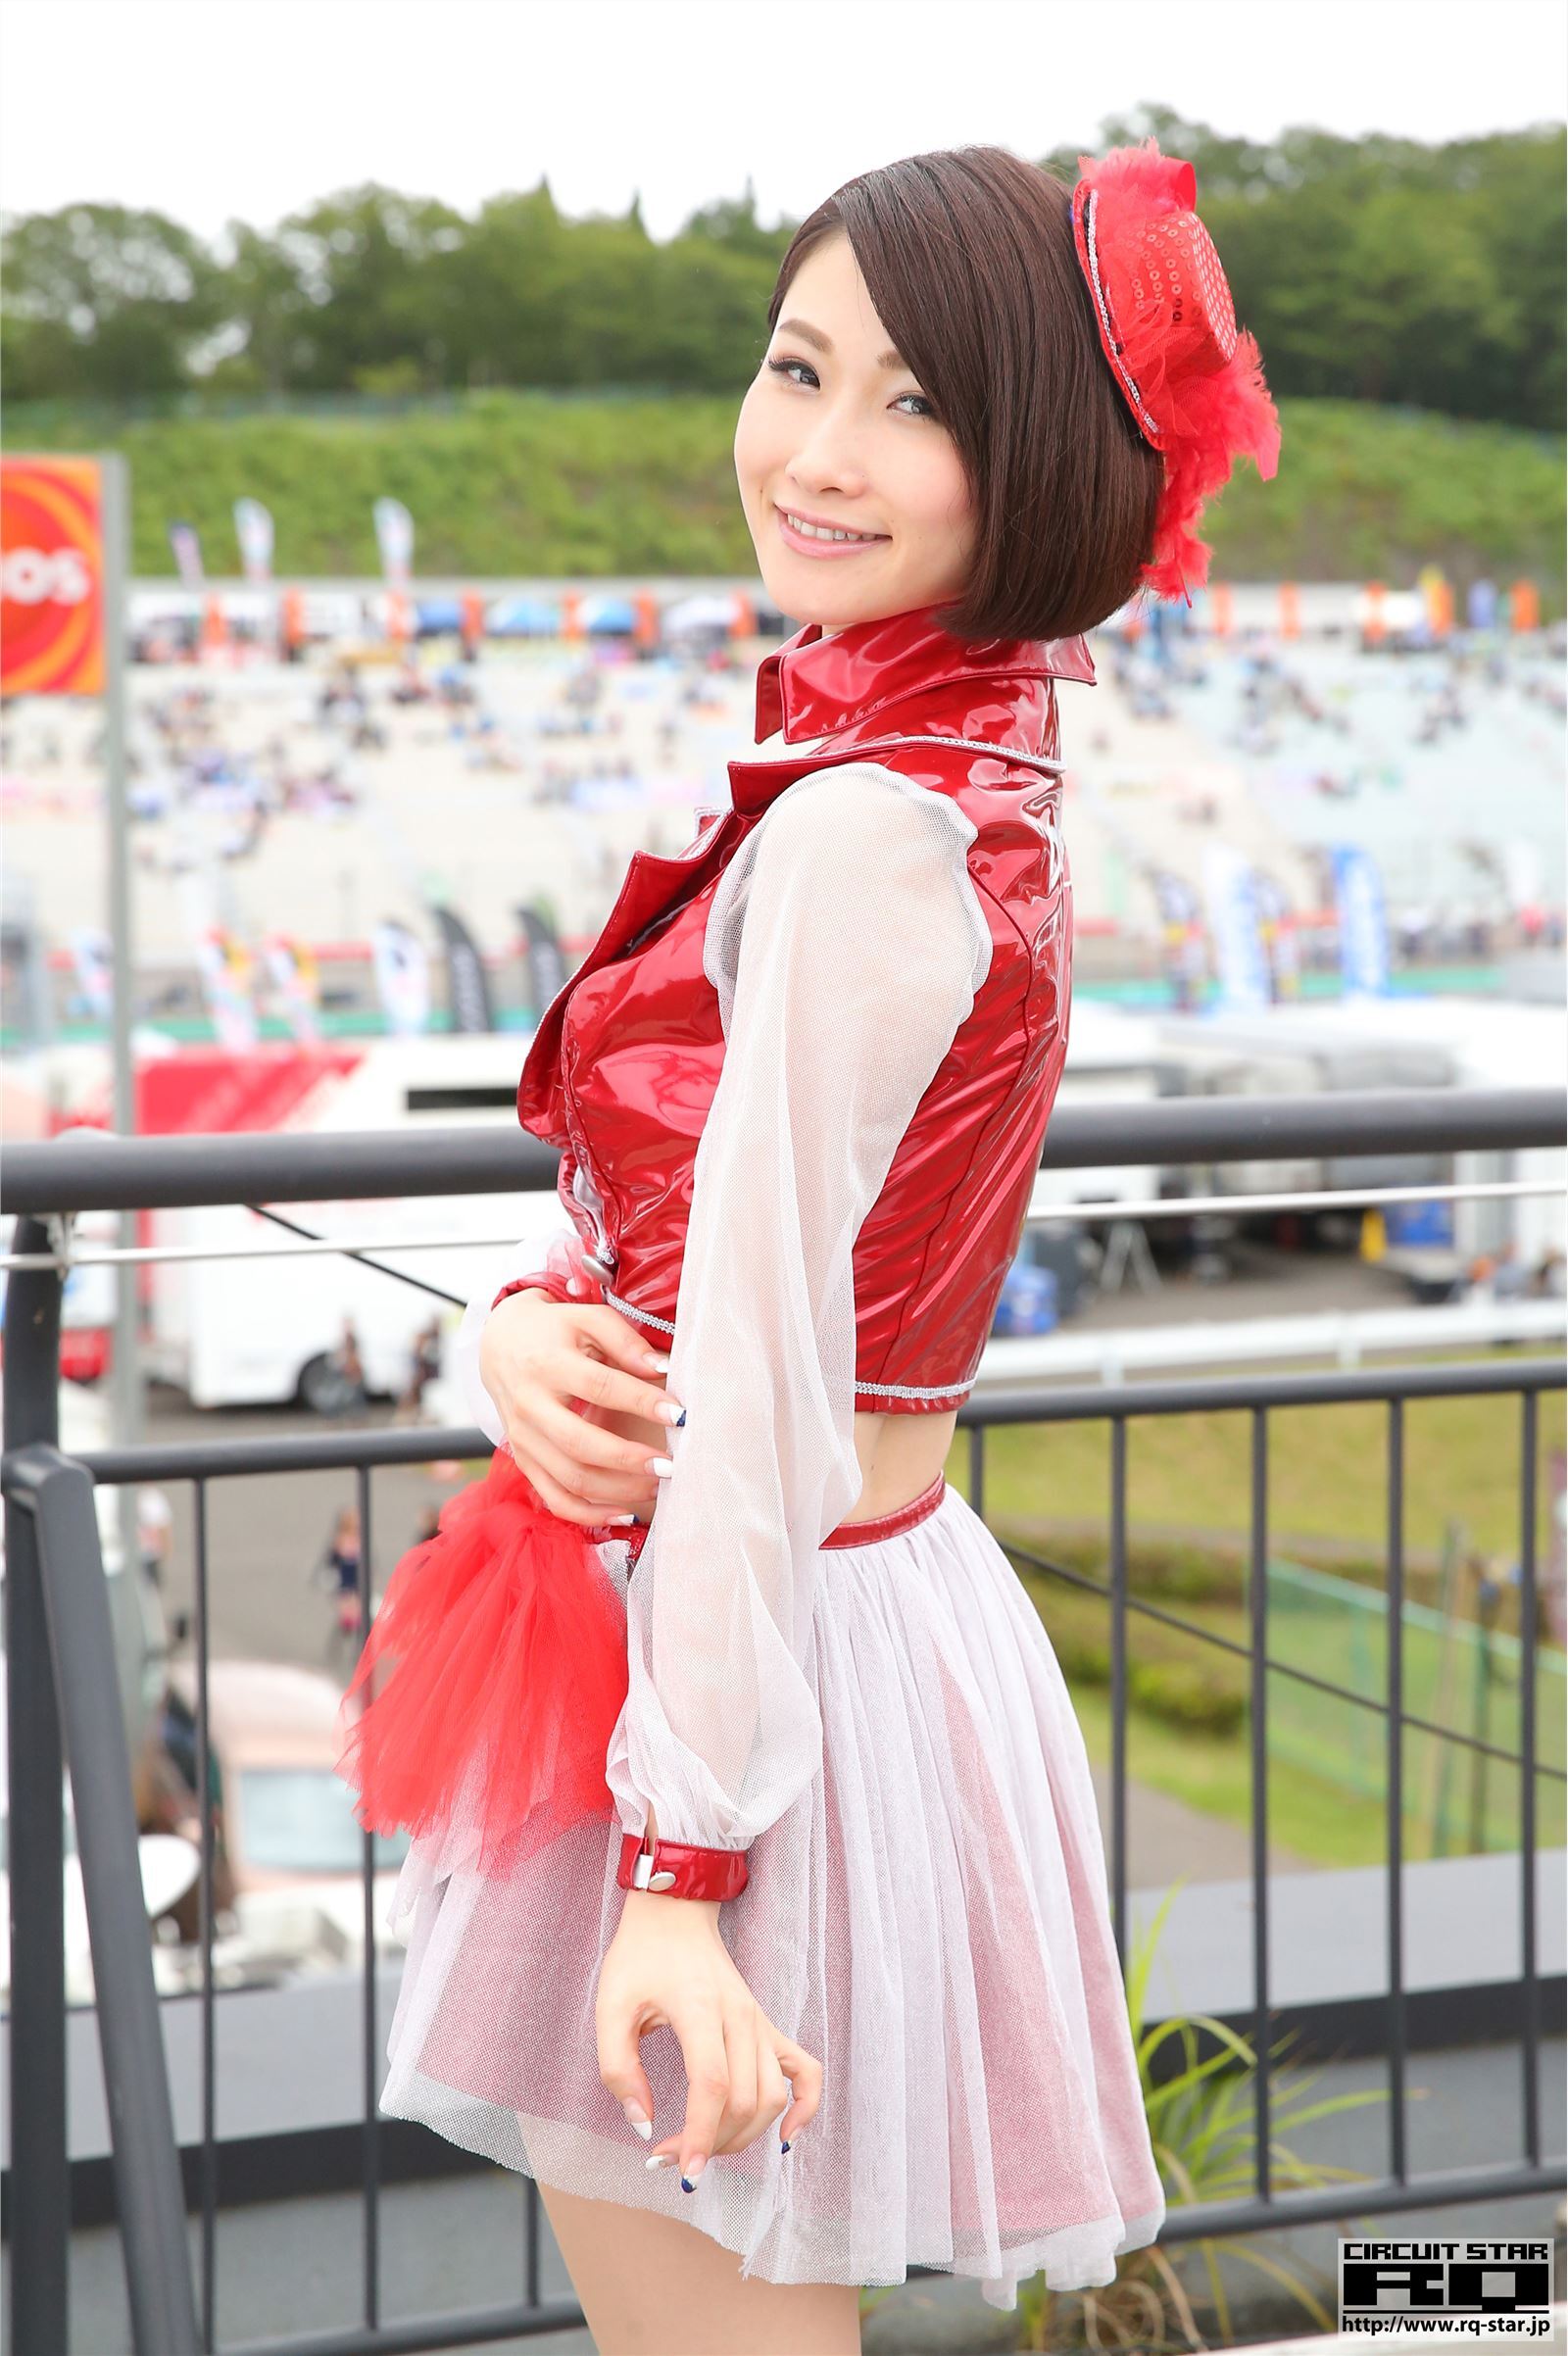 [rq-star] may 02, 2018 Kaya haruno Kazuo race queen